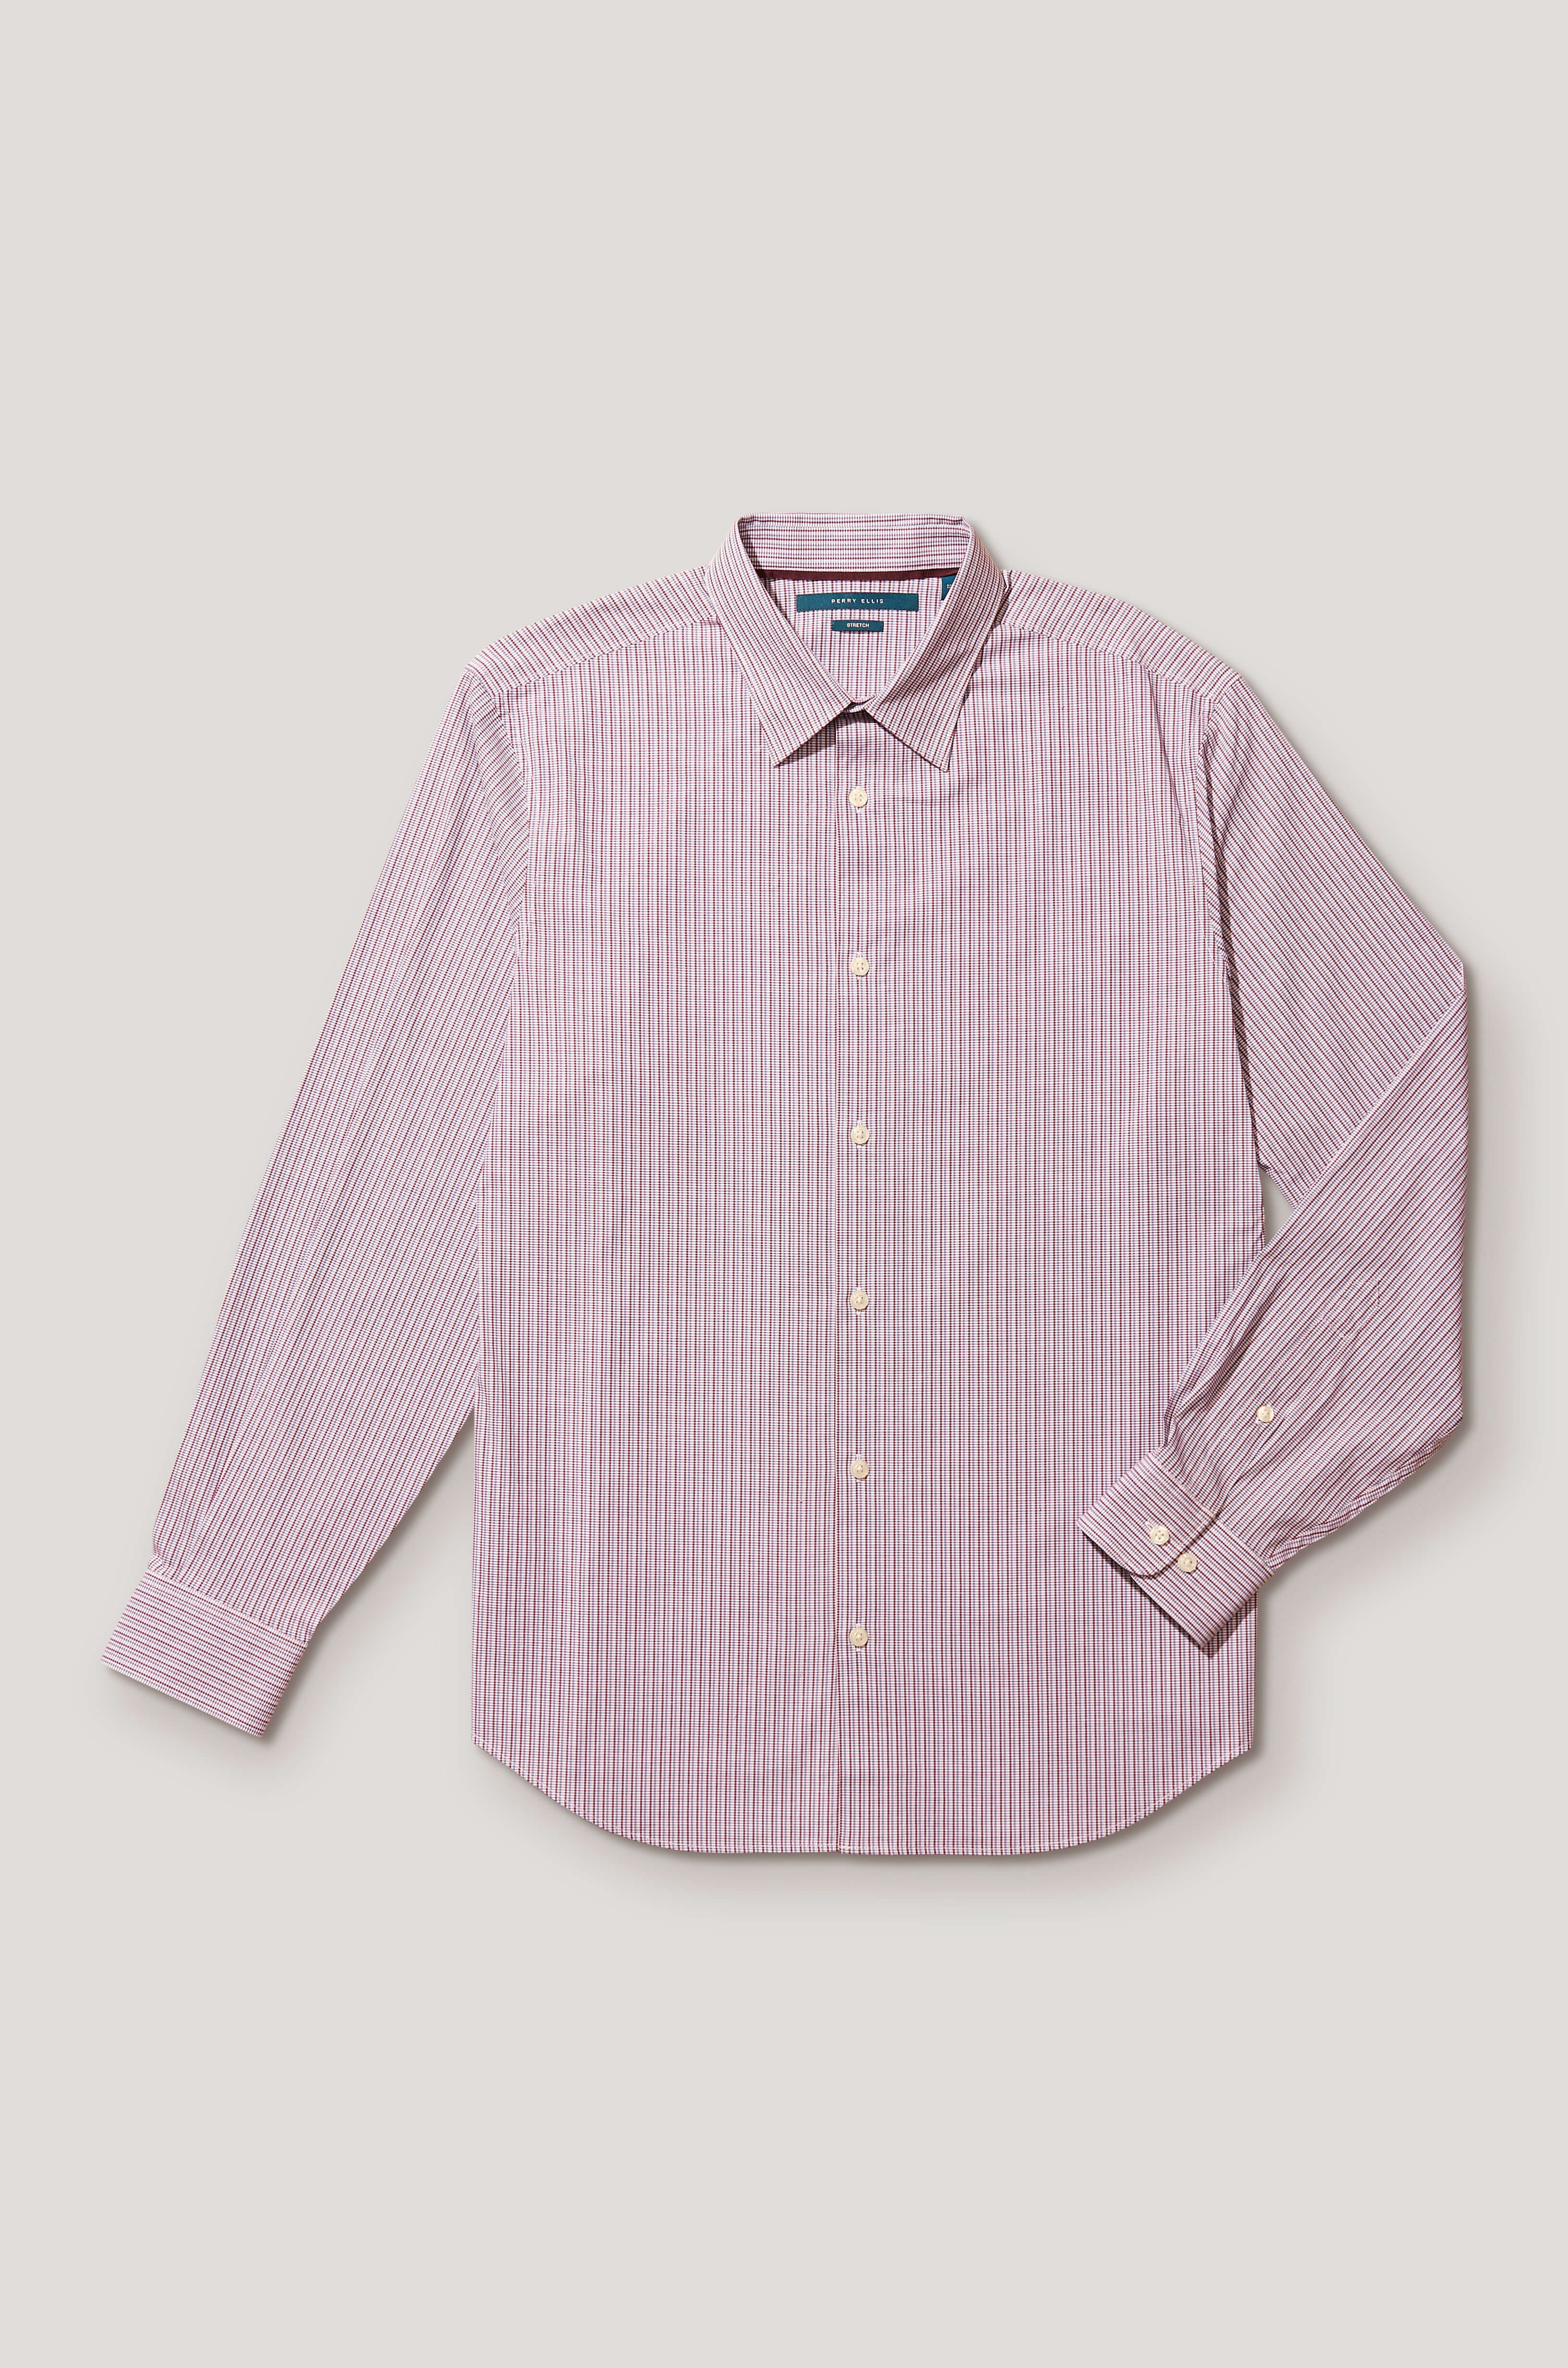 T.M.Lewin   Market Prints Slim Fit Pink Bengal Stripe Radish Shirt 